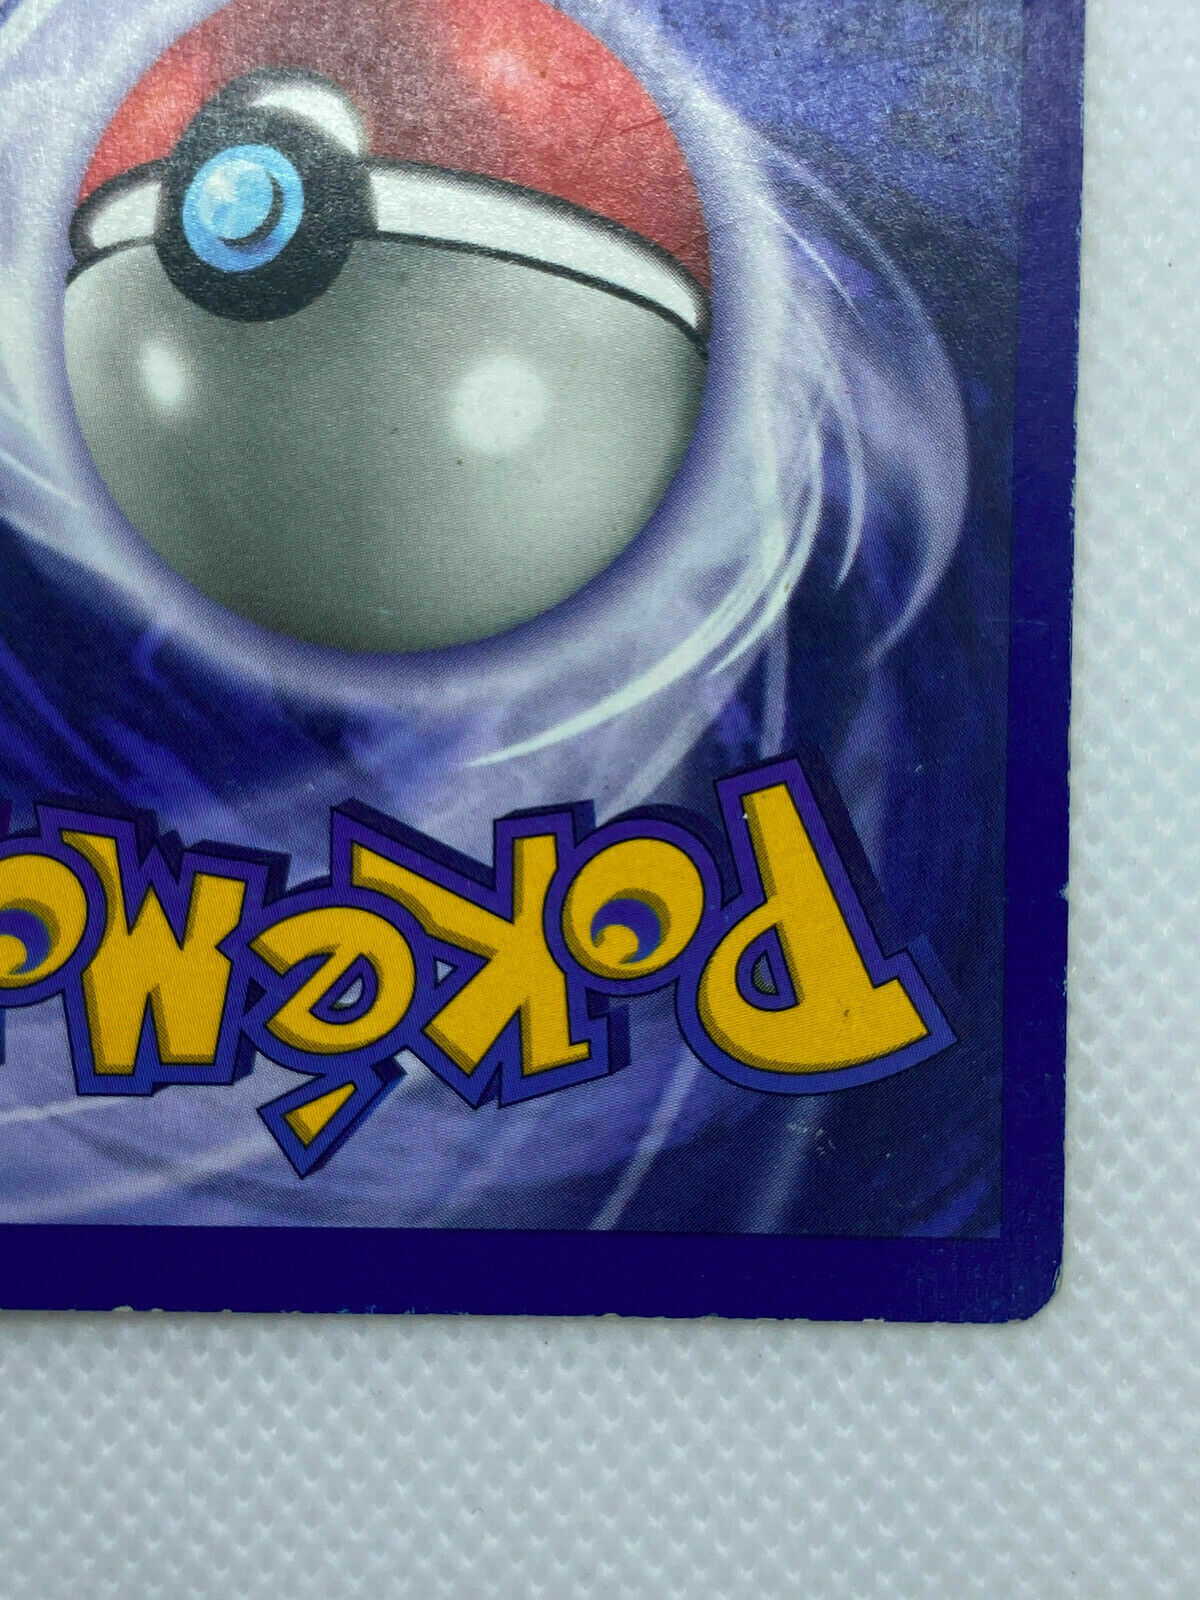 2x Krabby - Pokémon Água Comum - 13/119 - Pokemon Card Game